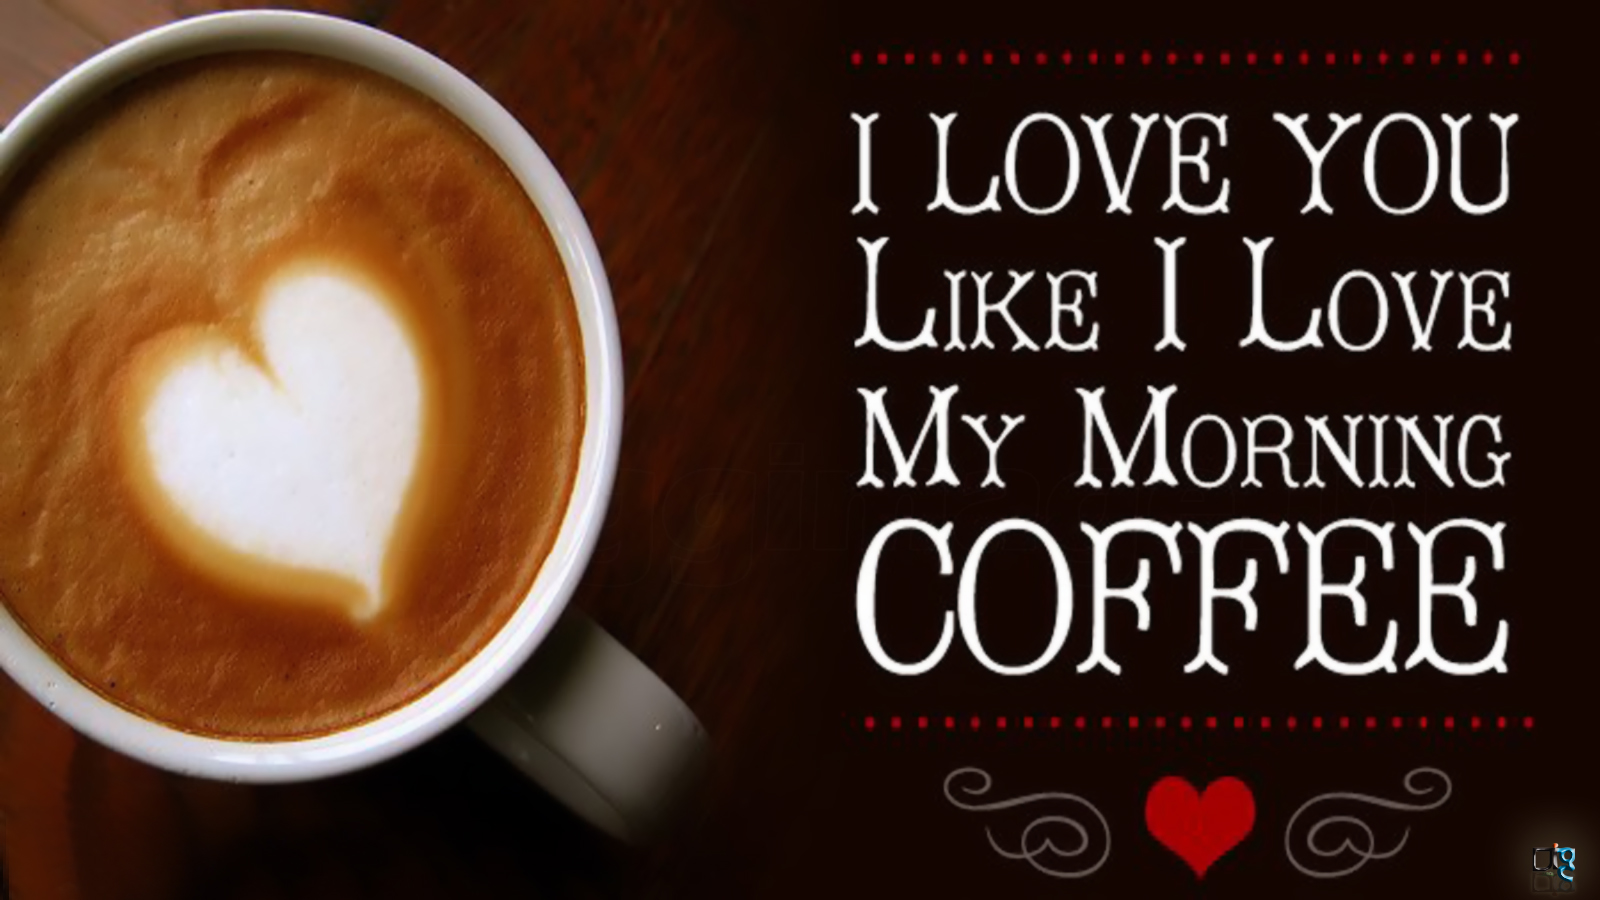 I love you like I love my morning coffee